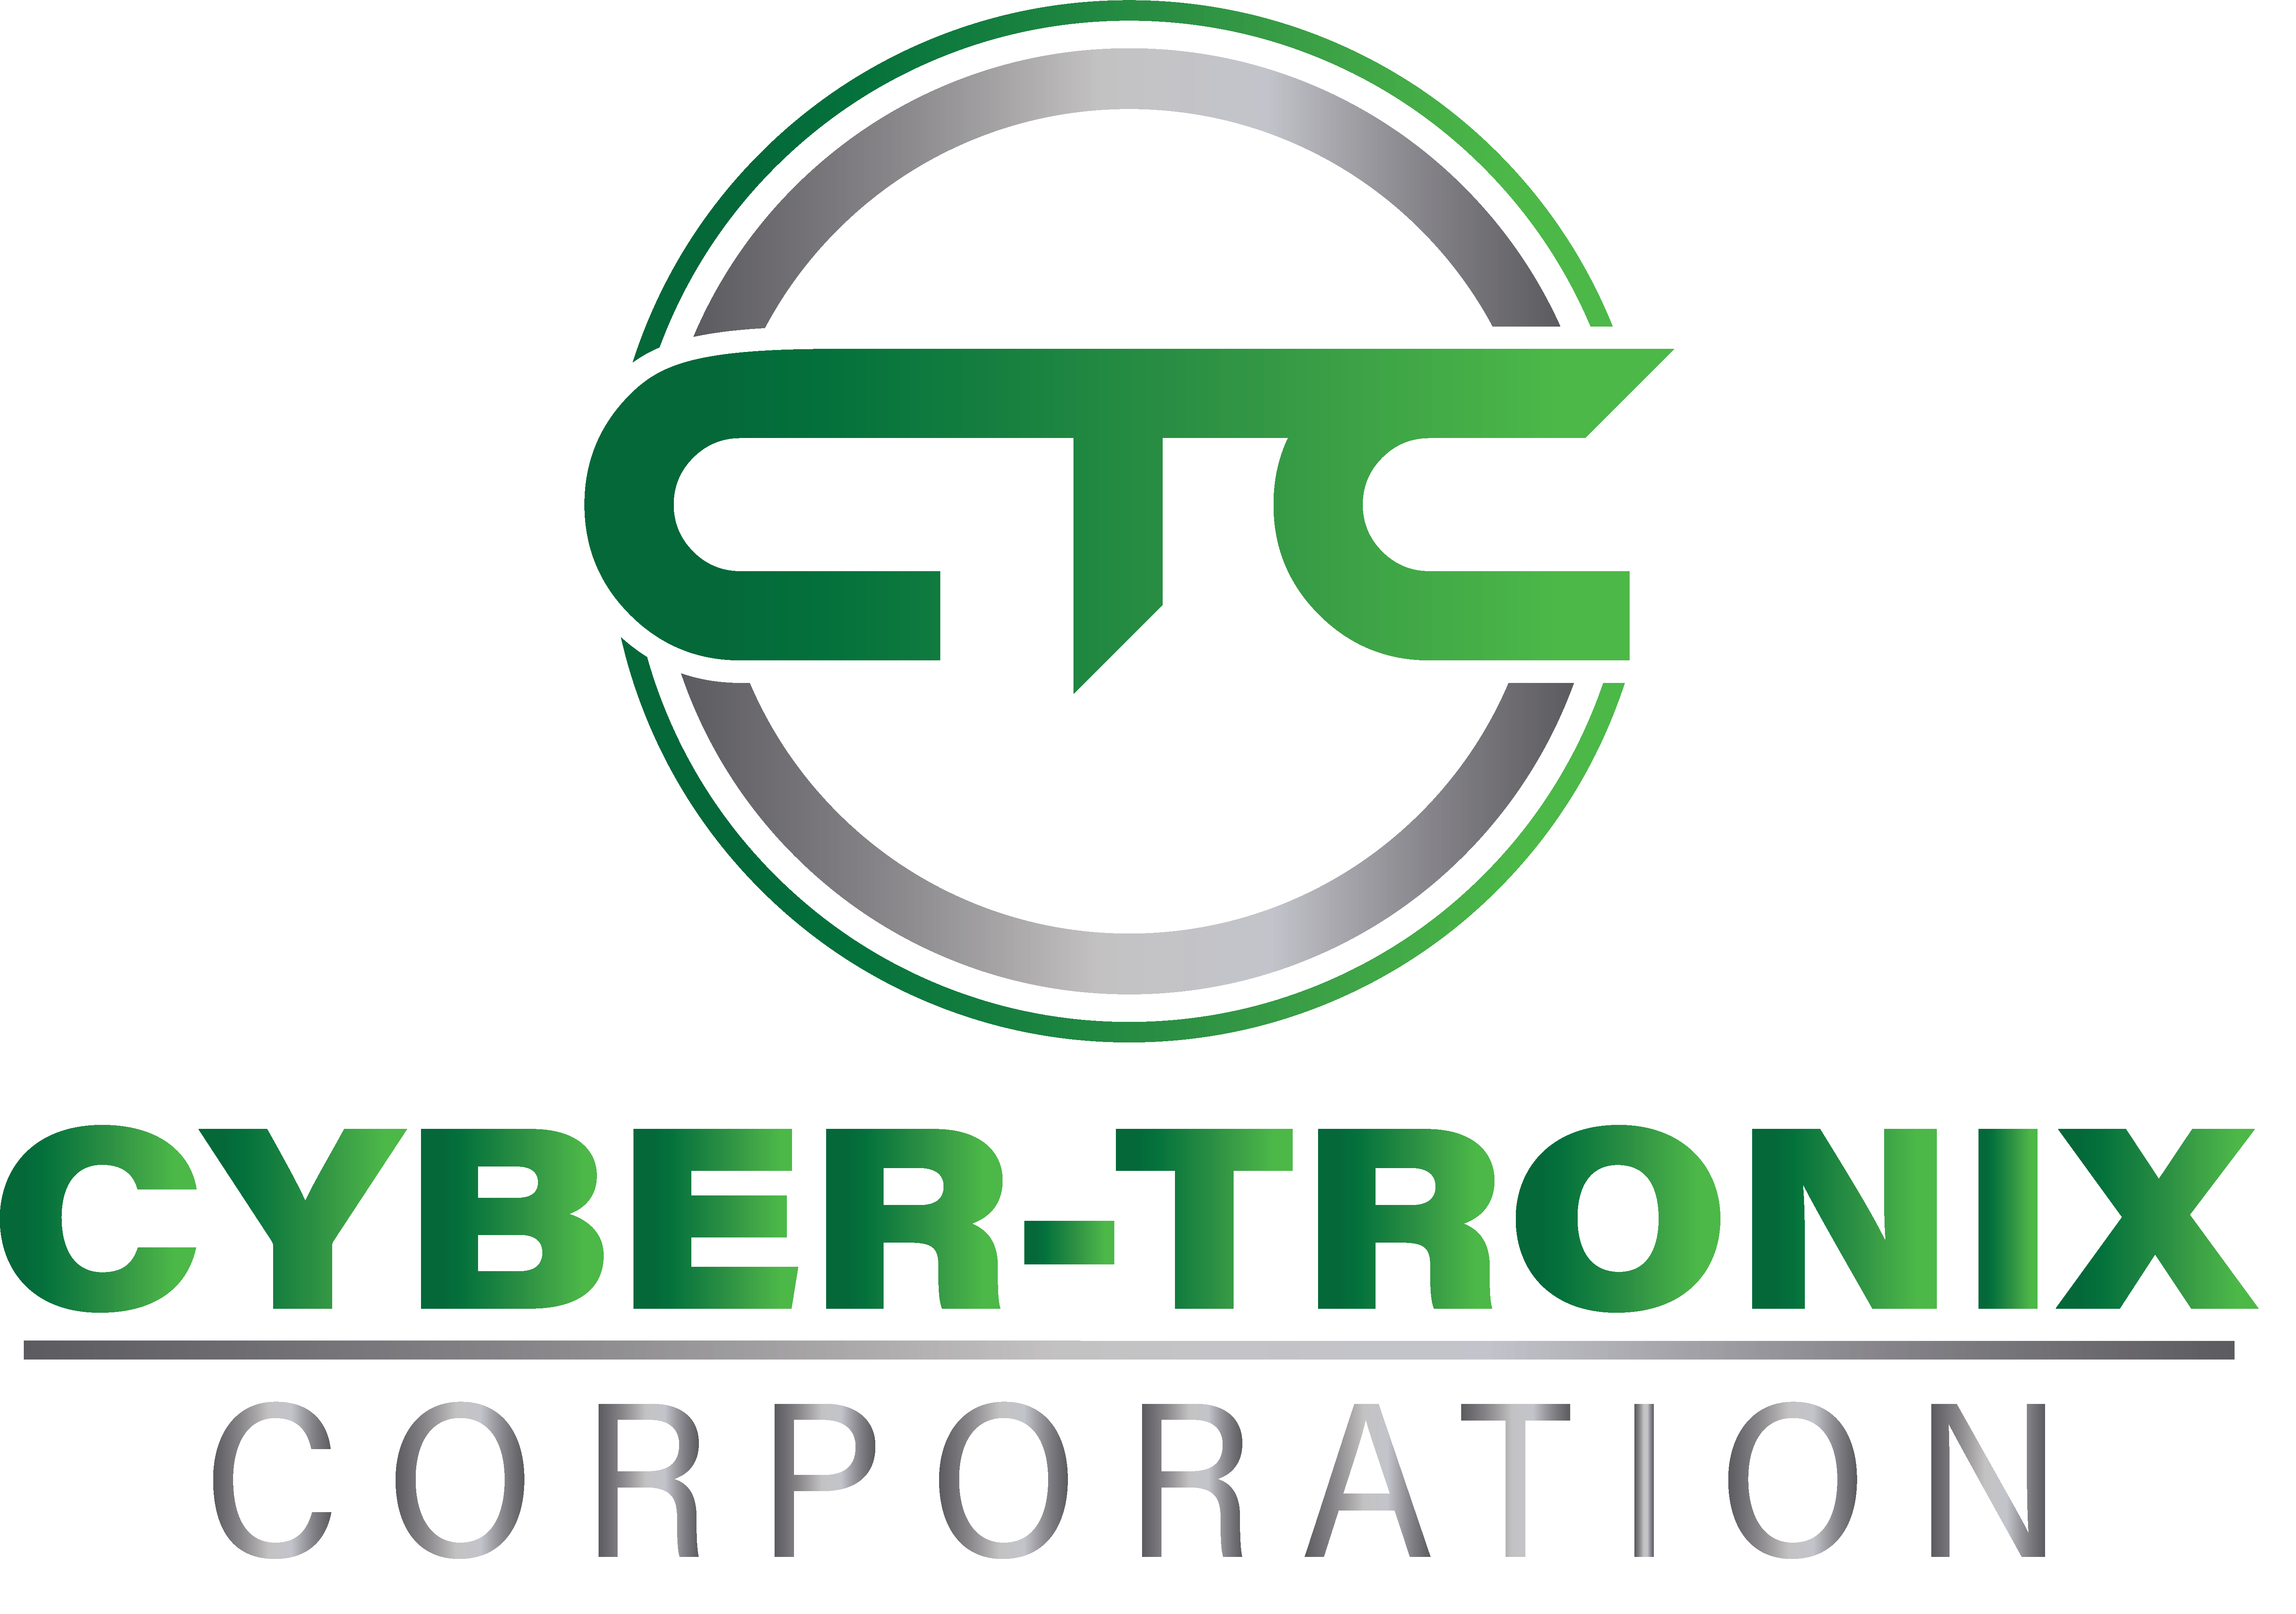 Cyber-Tronix Corporation